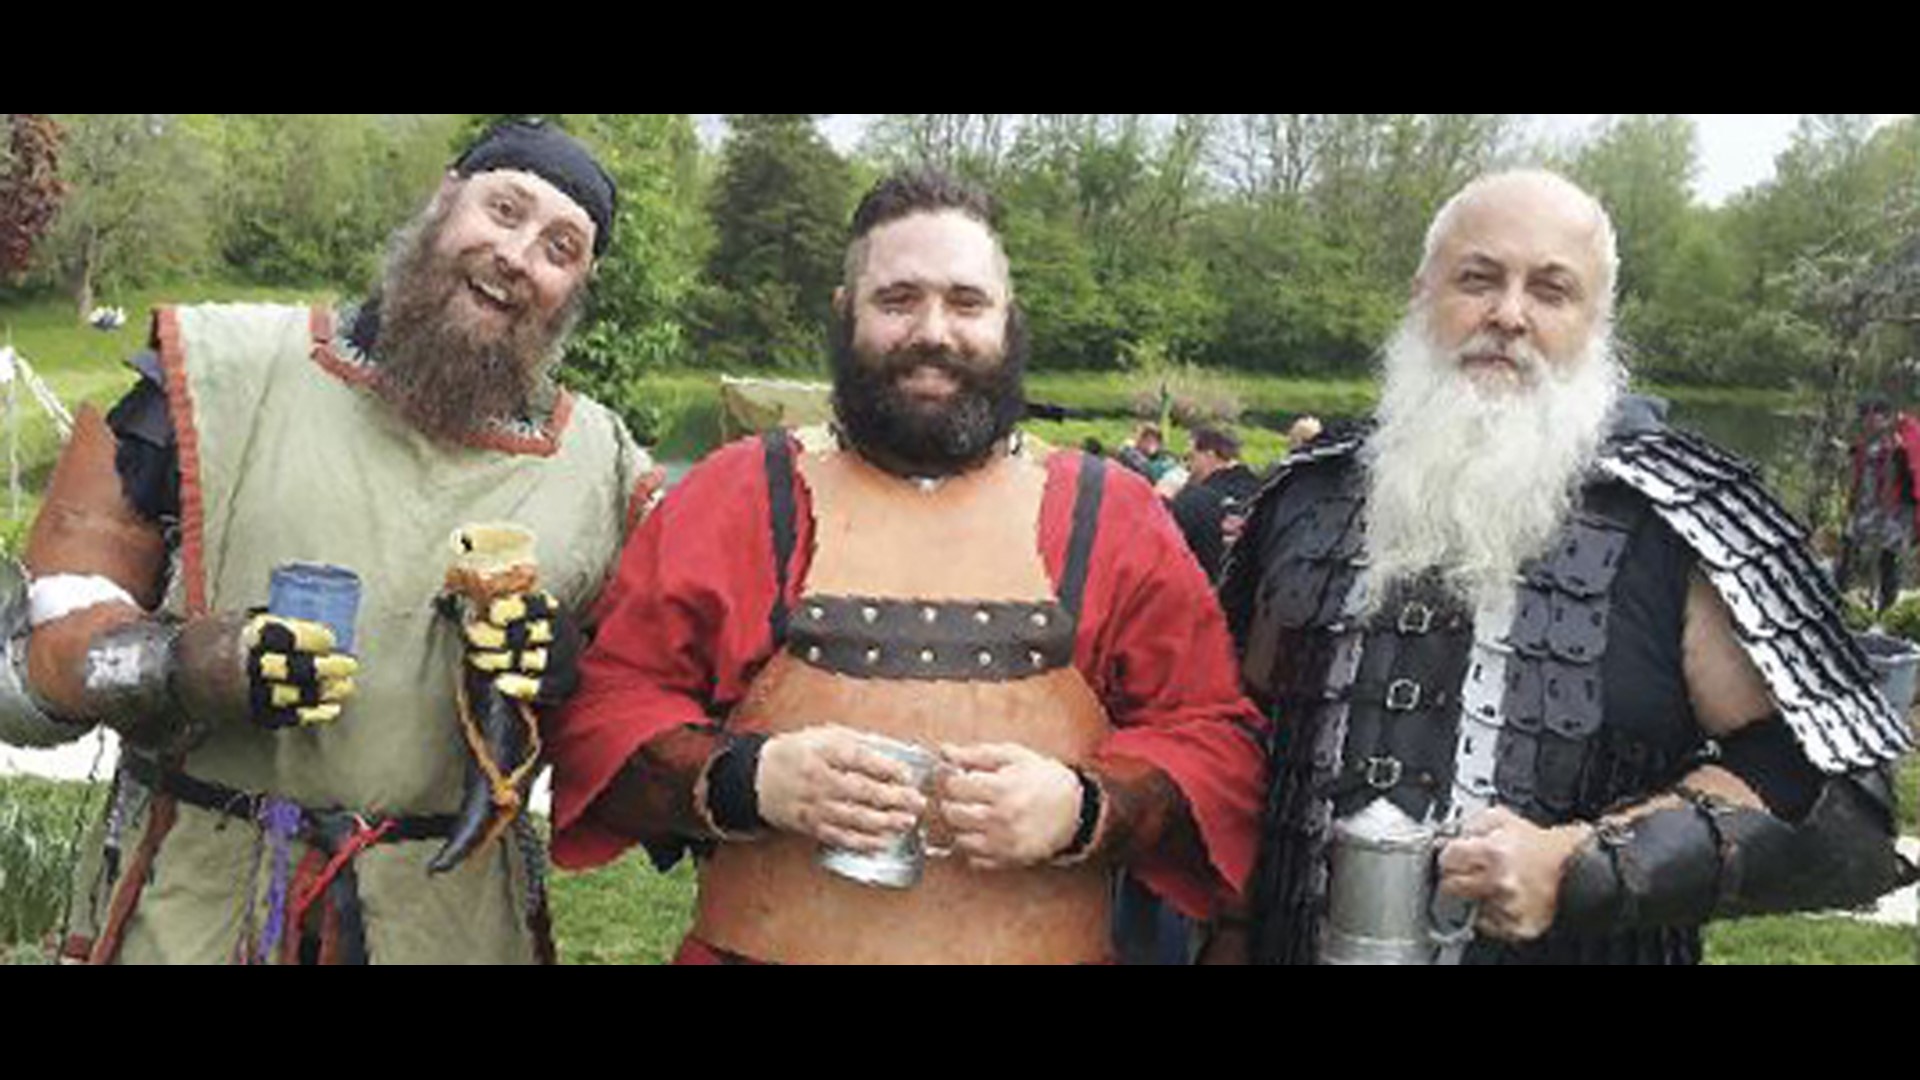 Whitestown's Viking Fest starts Friday